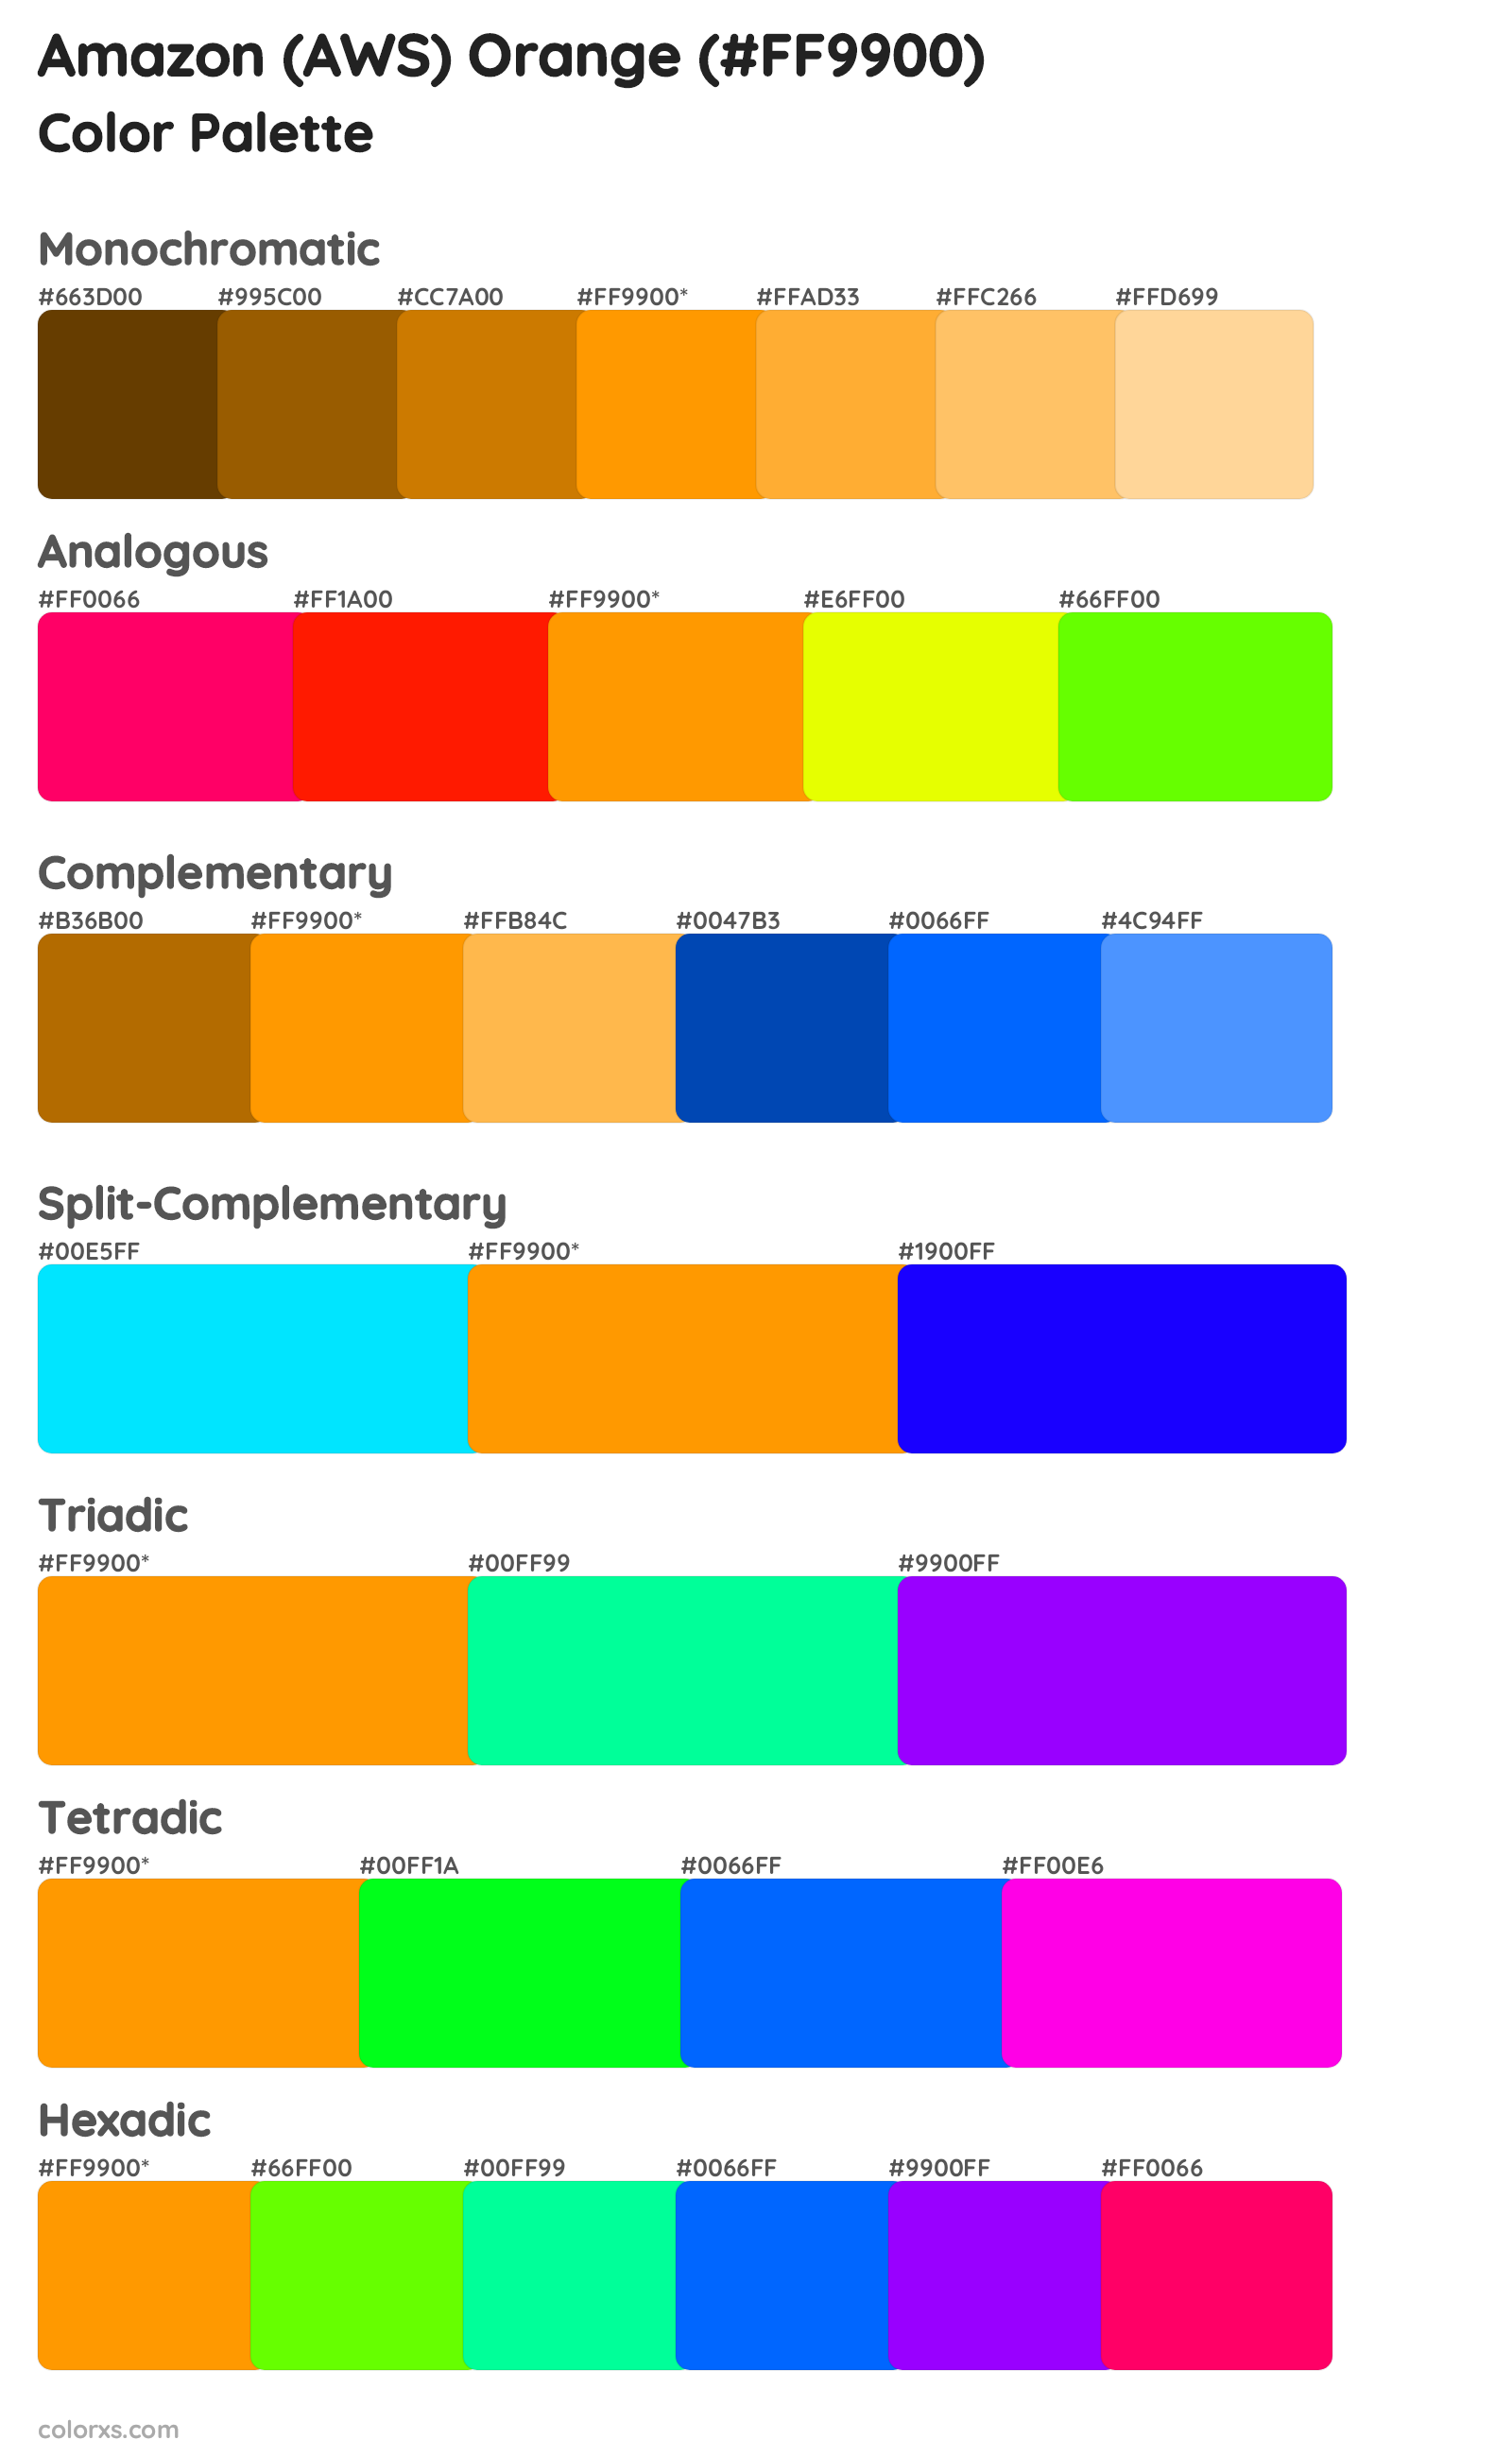 Amazon (AWS) Orange Color Scheme Palettes